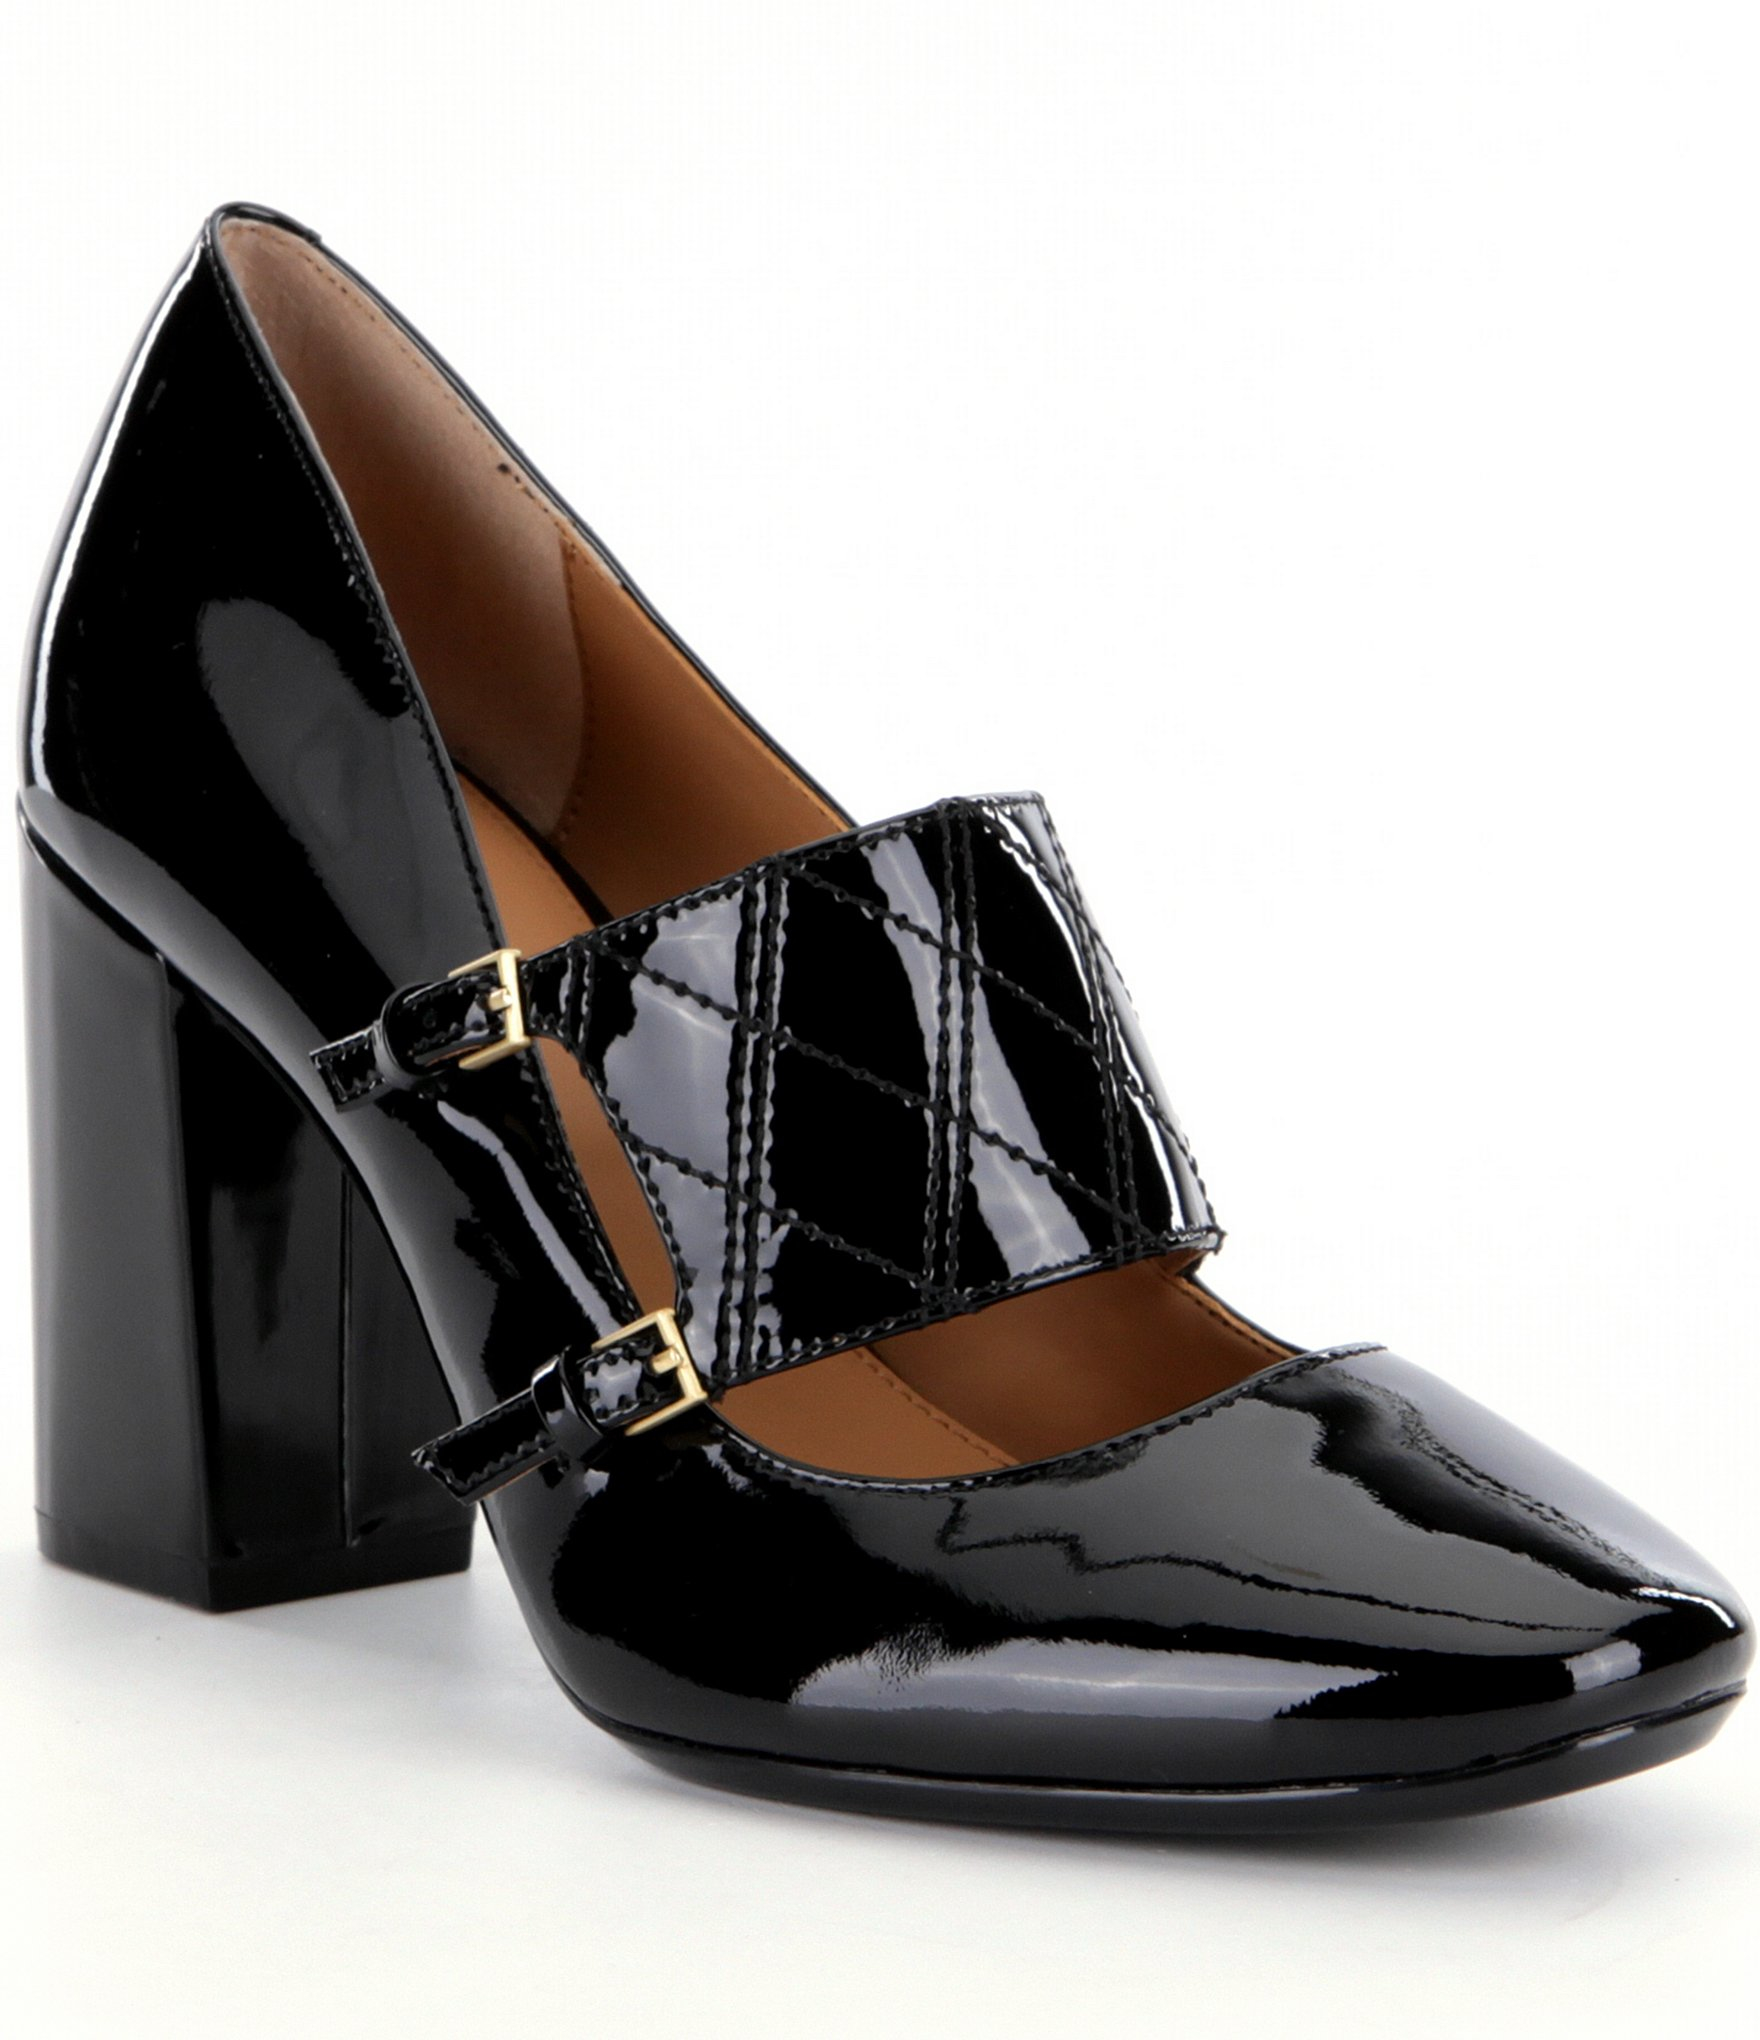 Lyst - Calvin Klein Casilla Block Heel Pumps in Black